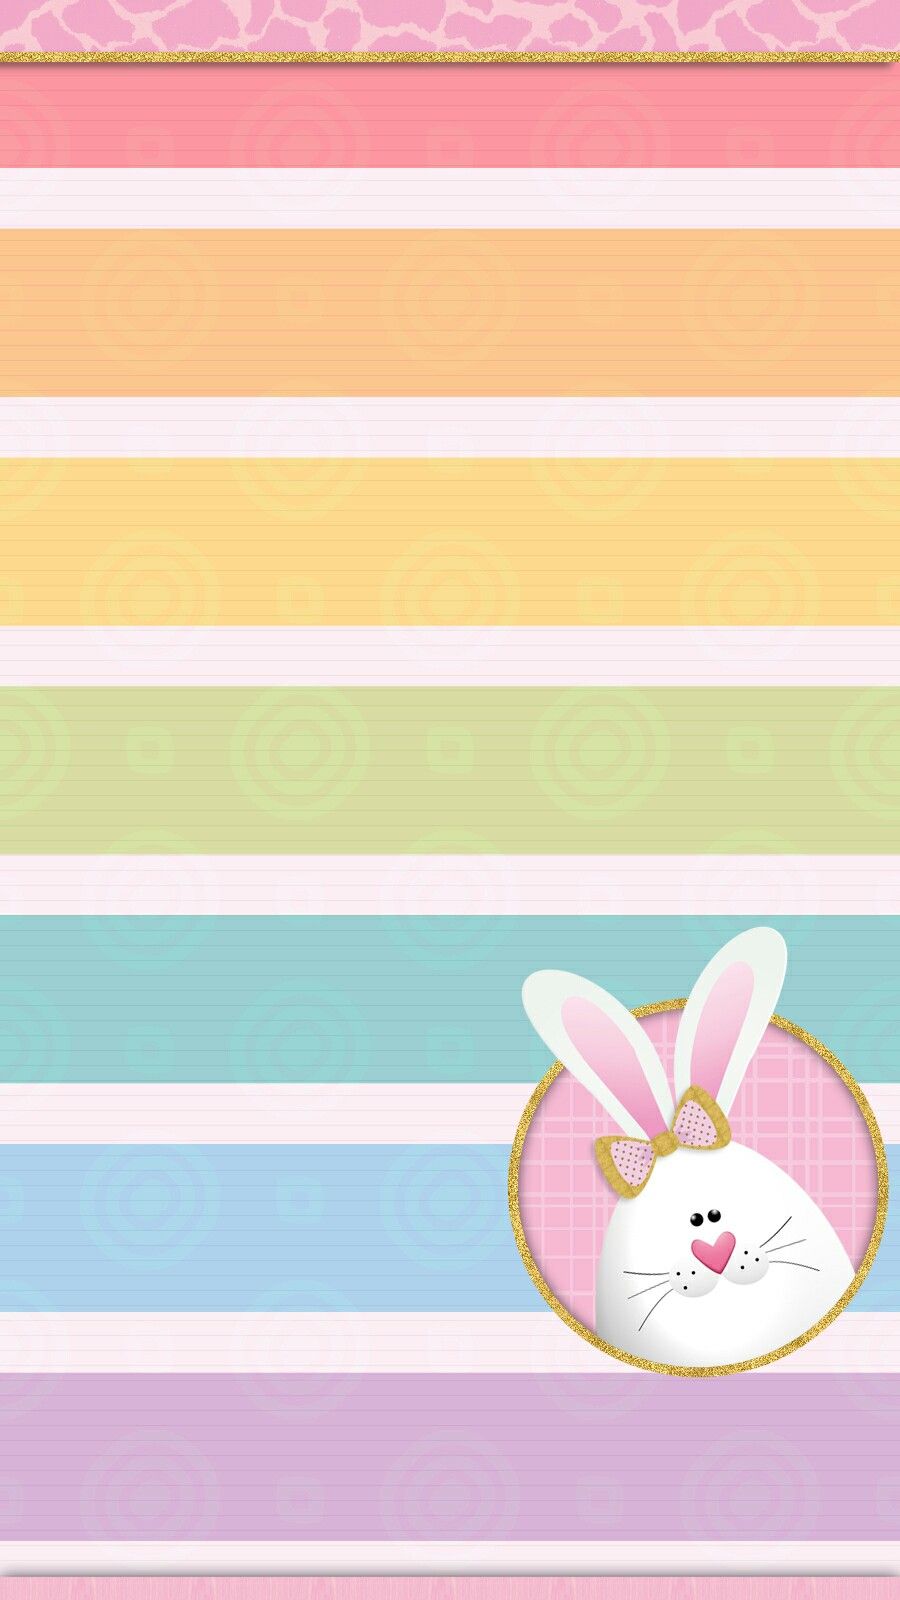 Easter bunny wallpaper iphone. Easter wallpaper, iPhone wallpaper easter, Happy easter wallpaper